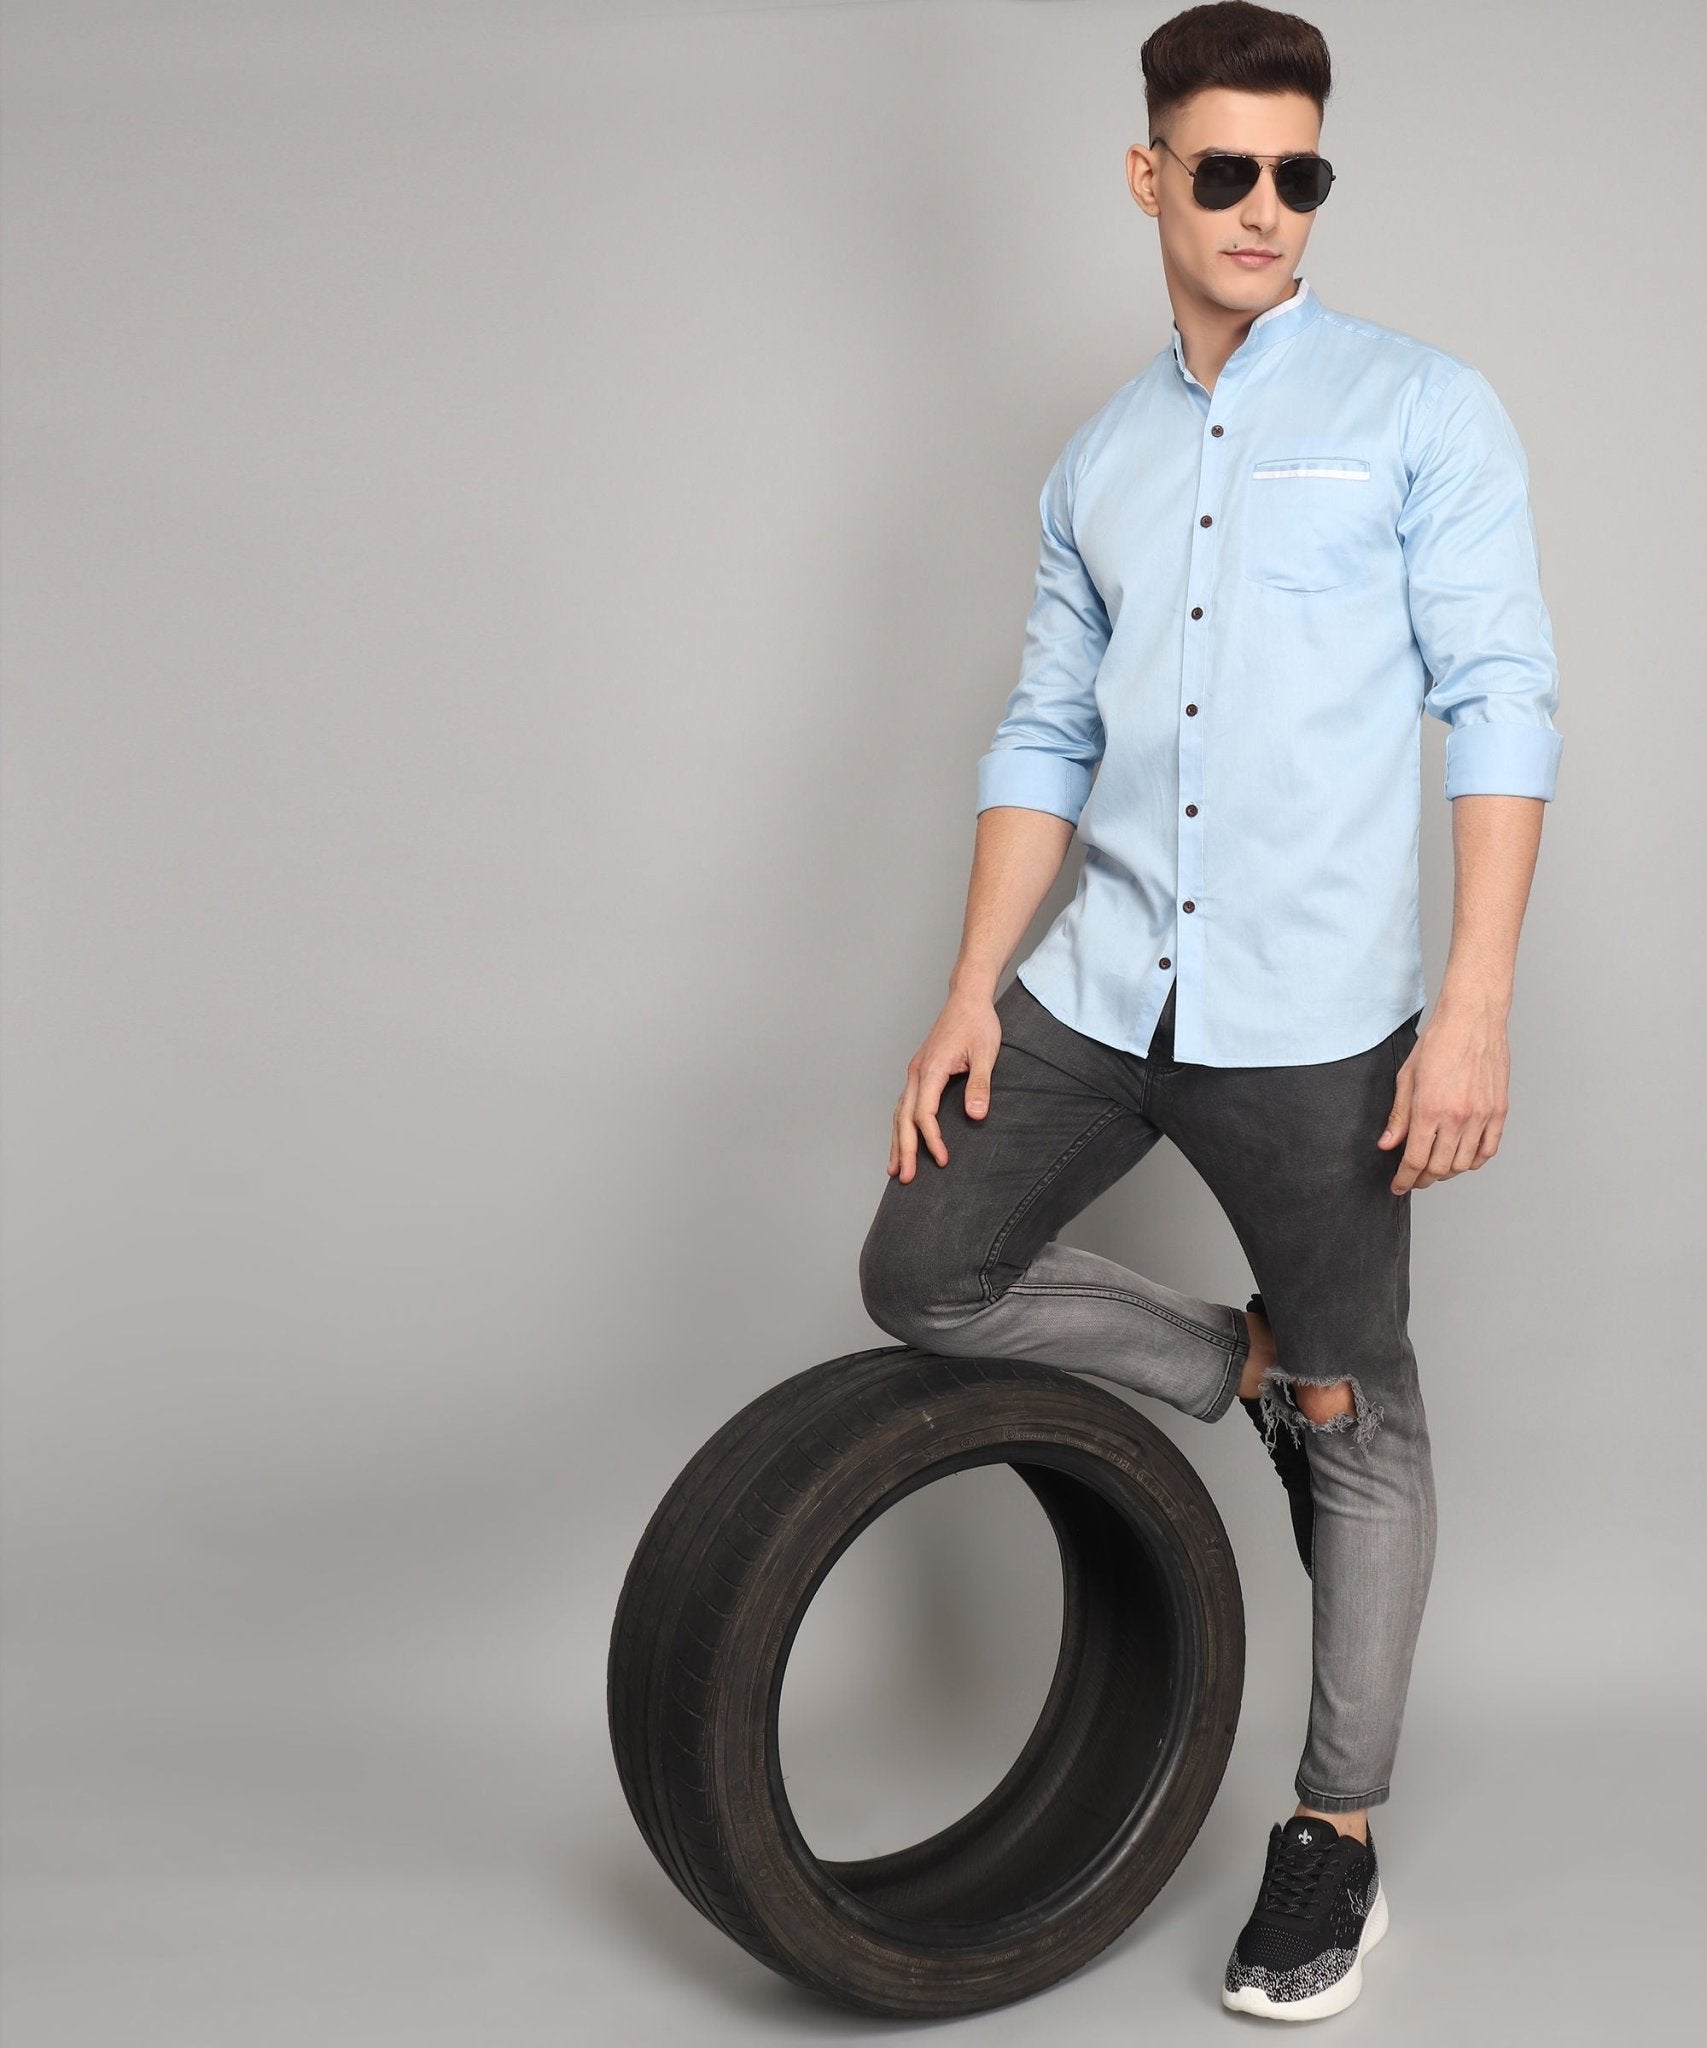 TryBuy Premium Fashionable Full Sleeves Mandarin Collar Sky Blue Cotton Casual Shirt for Men - TryBuy® USA🇺🇸